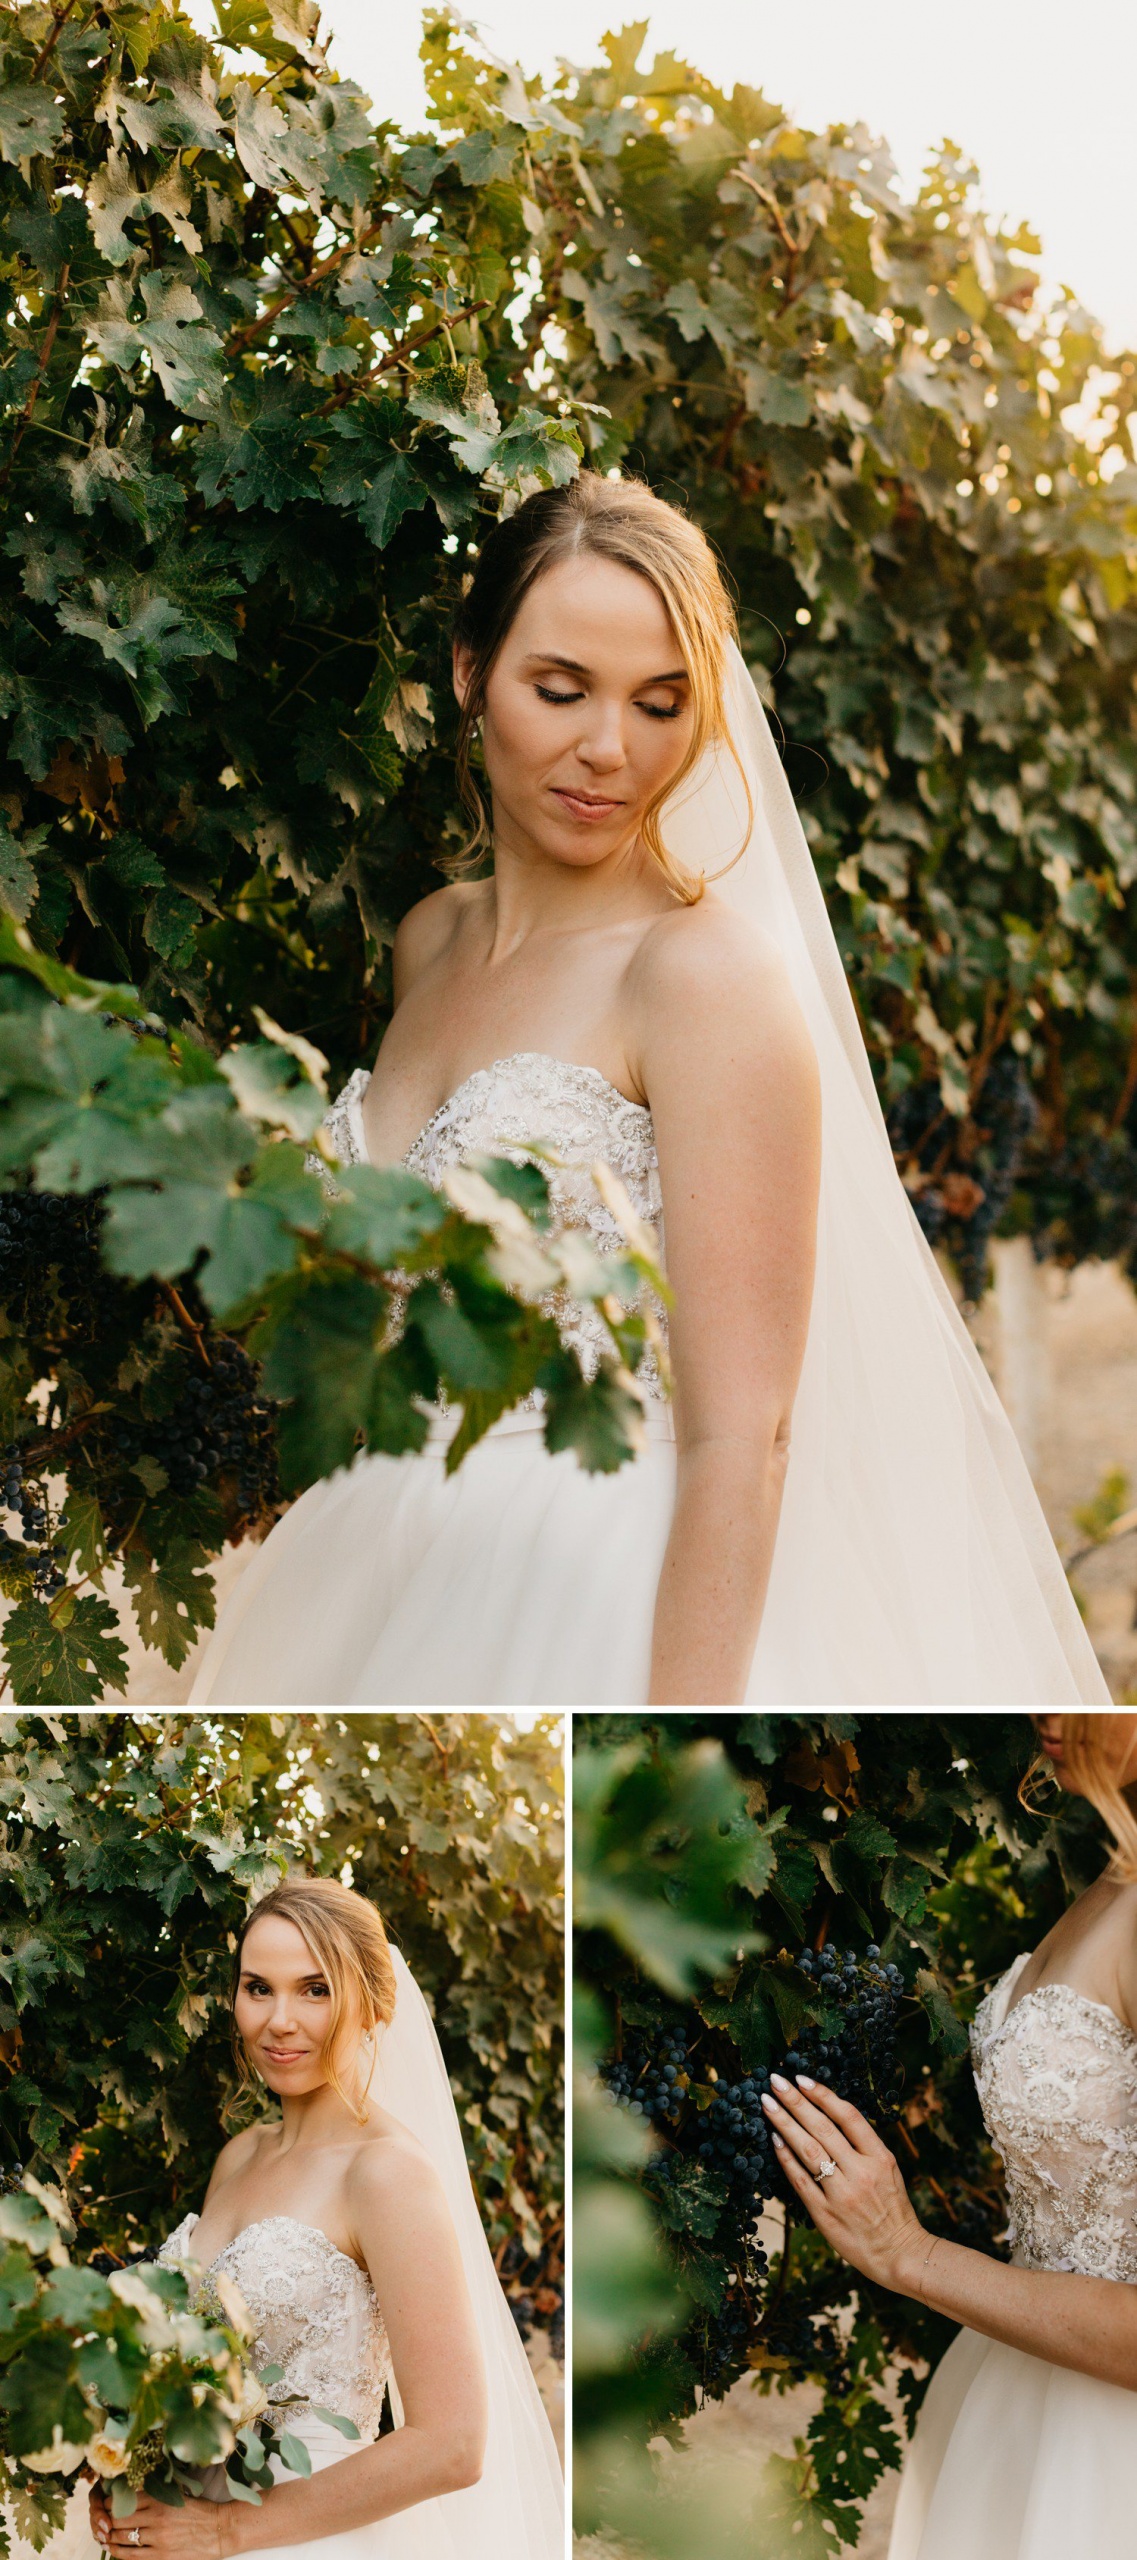 Bridal Photos in California Vineyard in Sonoma